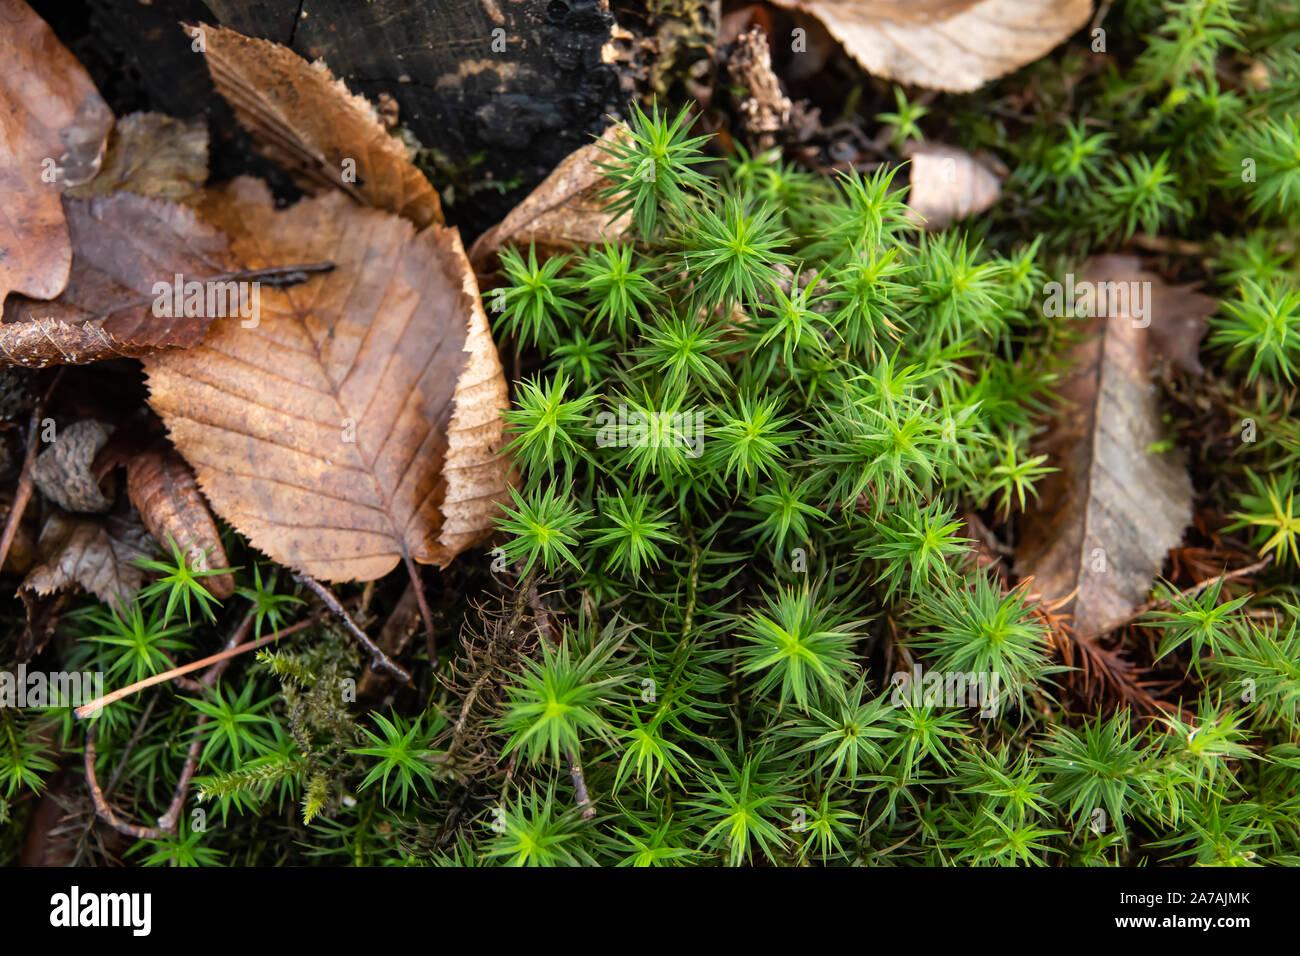 polytrichum-moss-growing-in-autumn-2A7AJMK.jpg